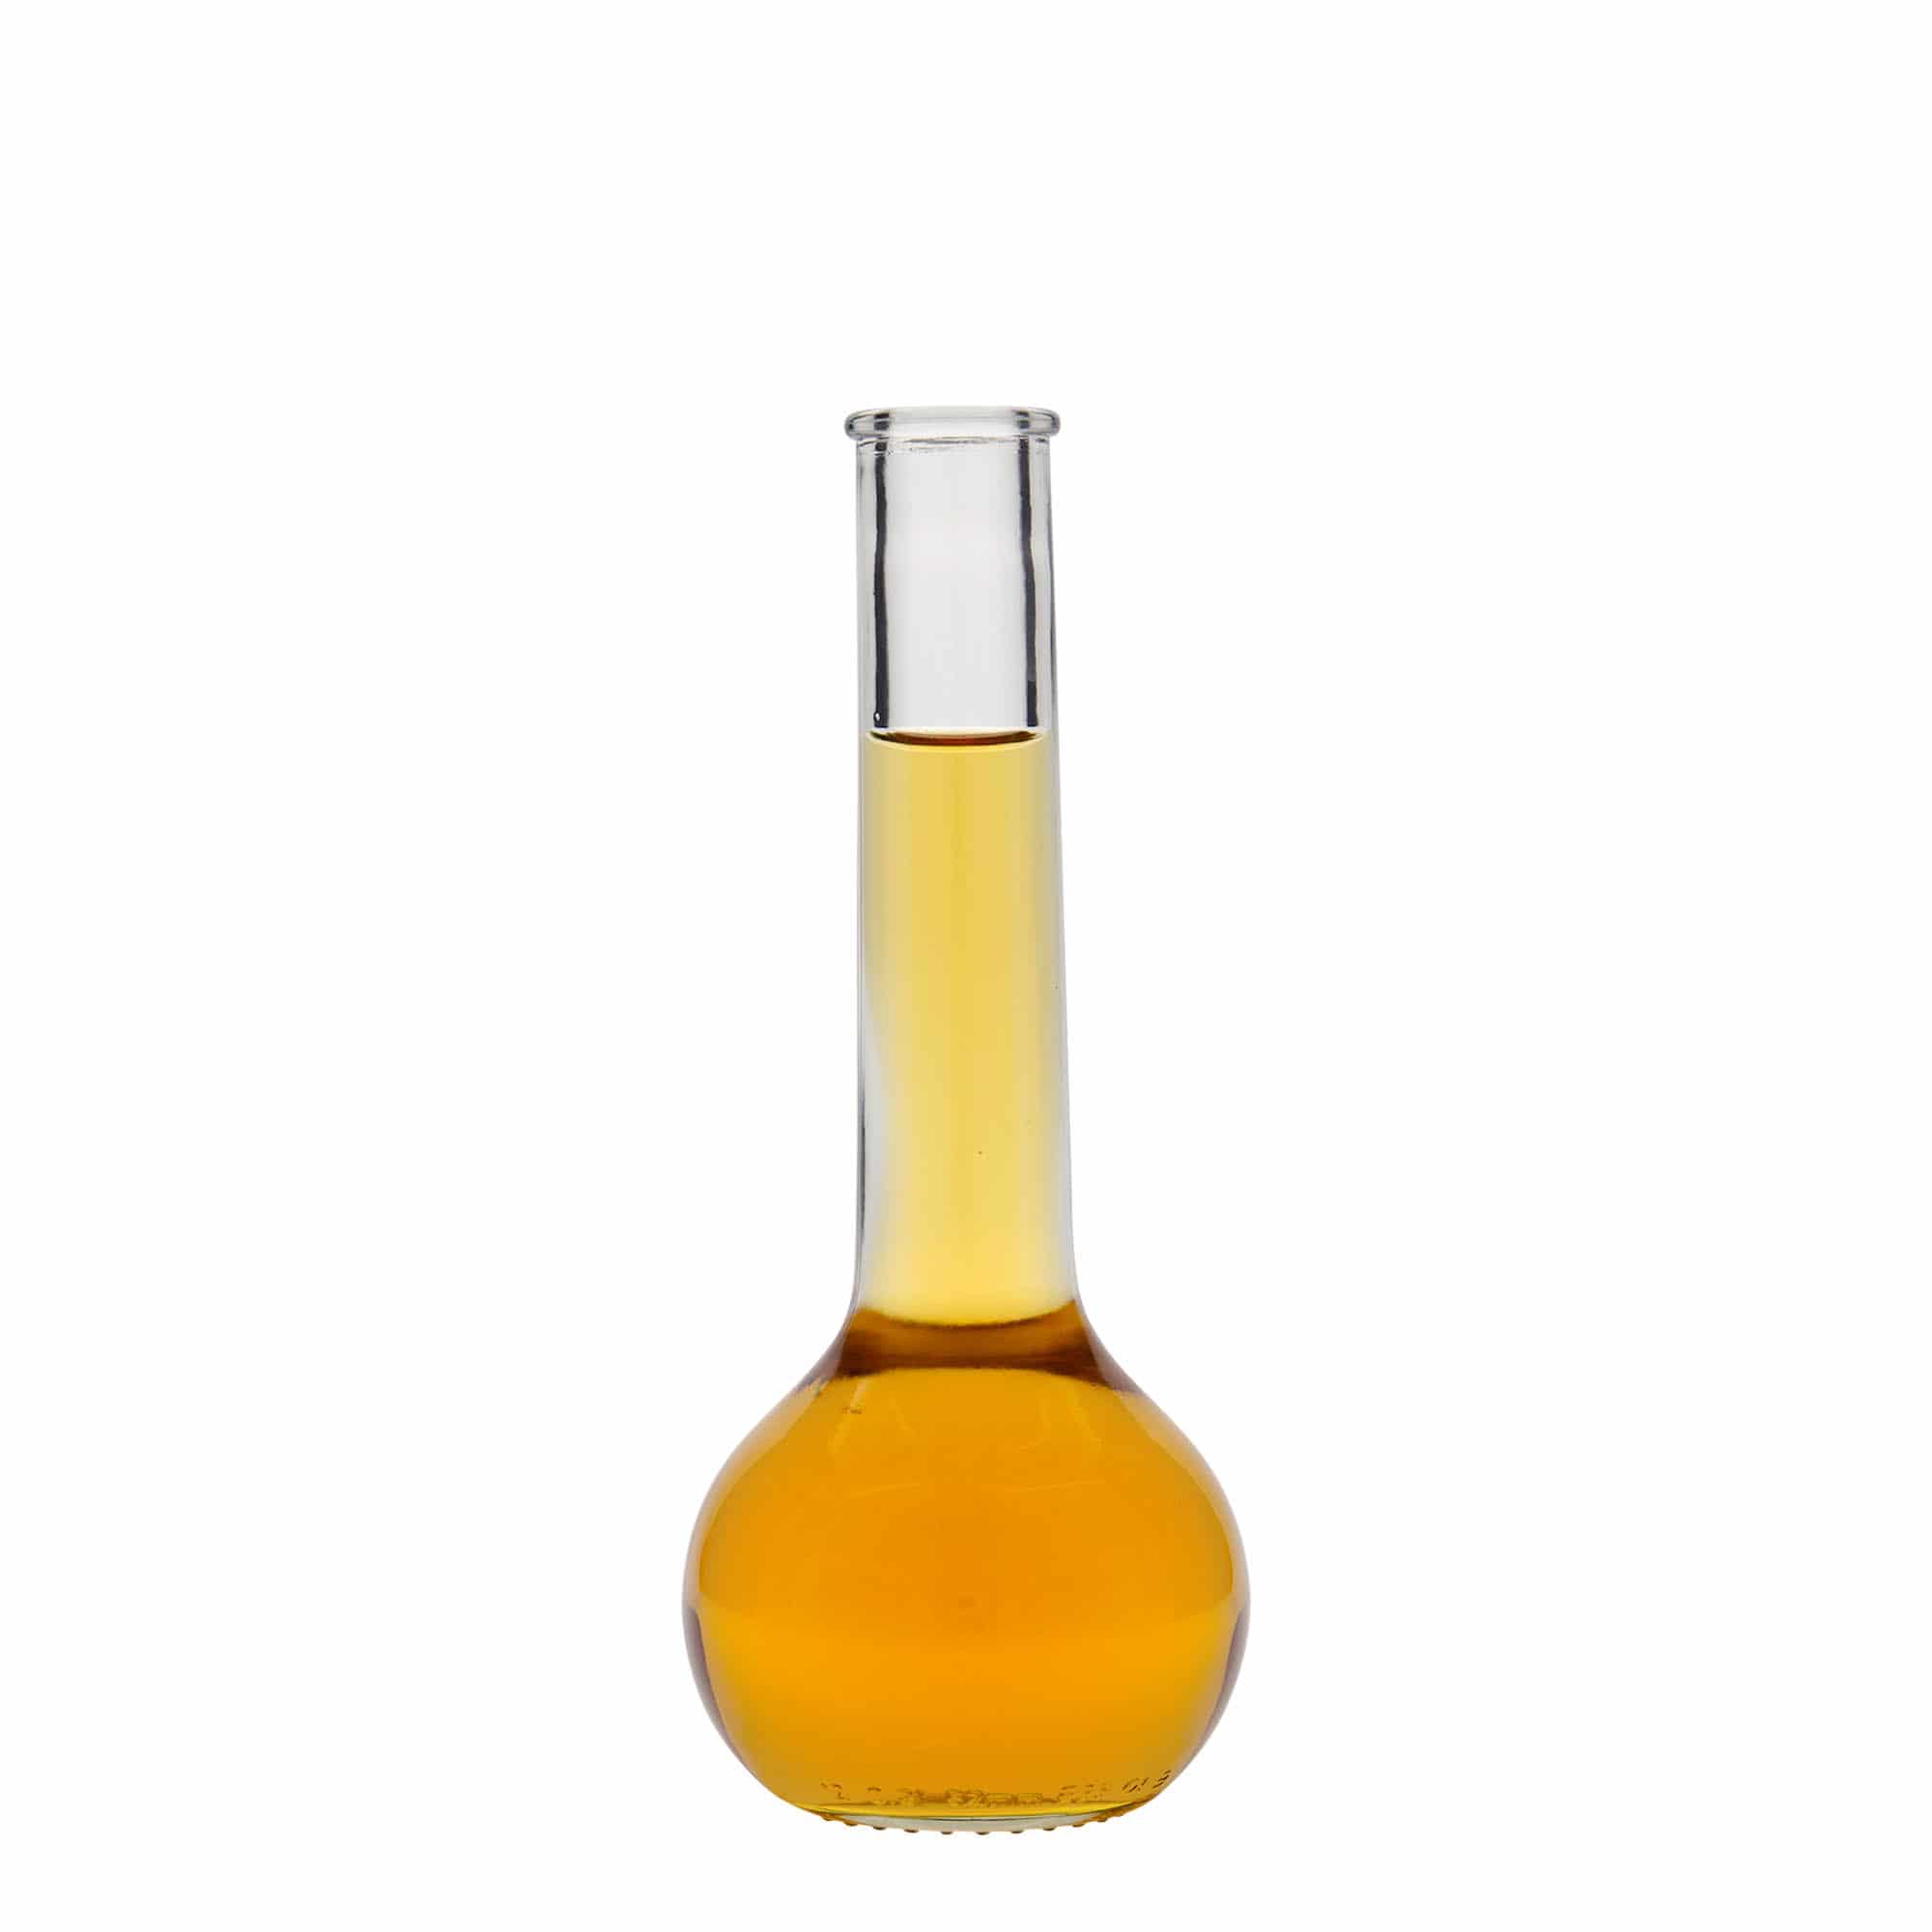 200 ml glass bottle 'Tulipano', closure: cork